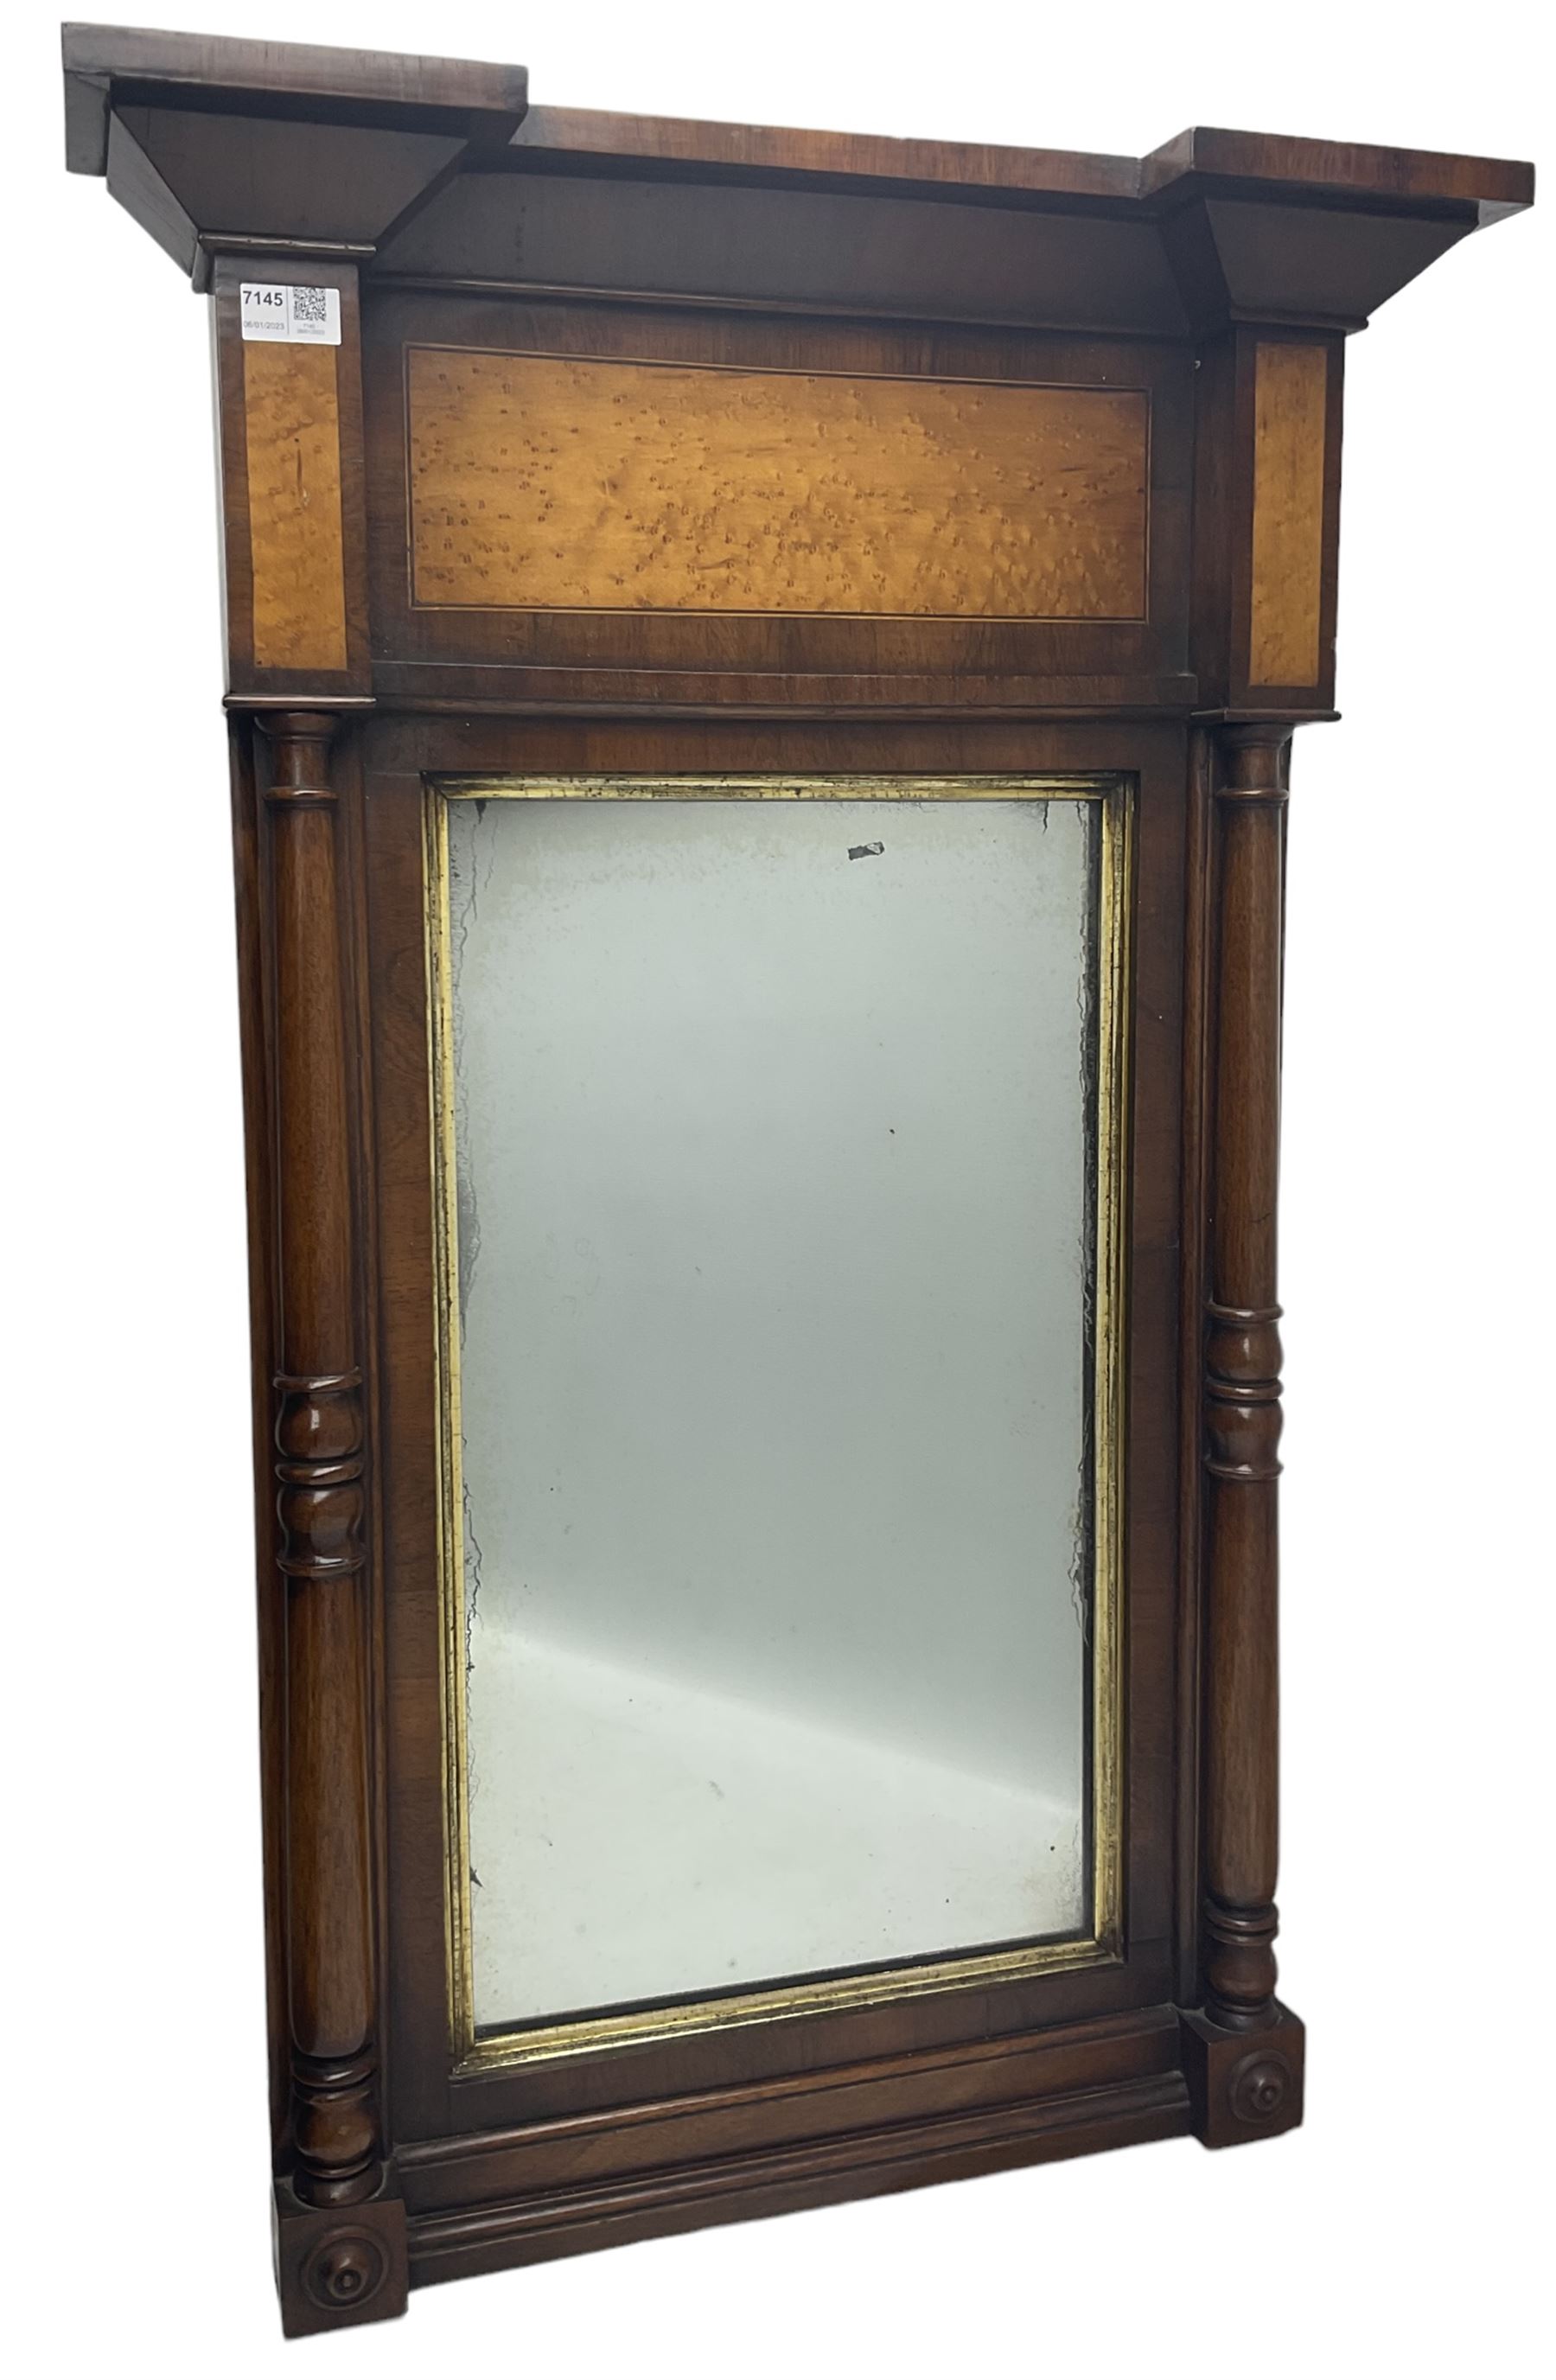 19th century pier glass mirror